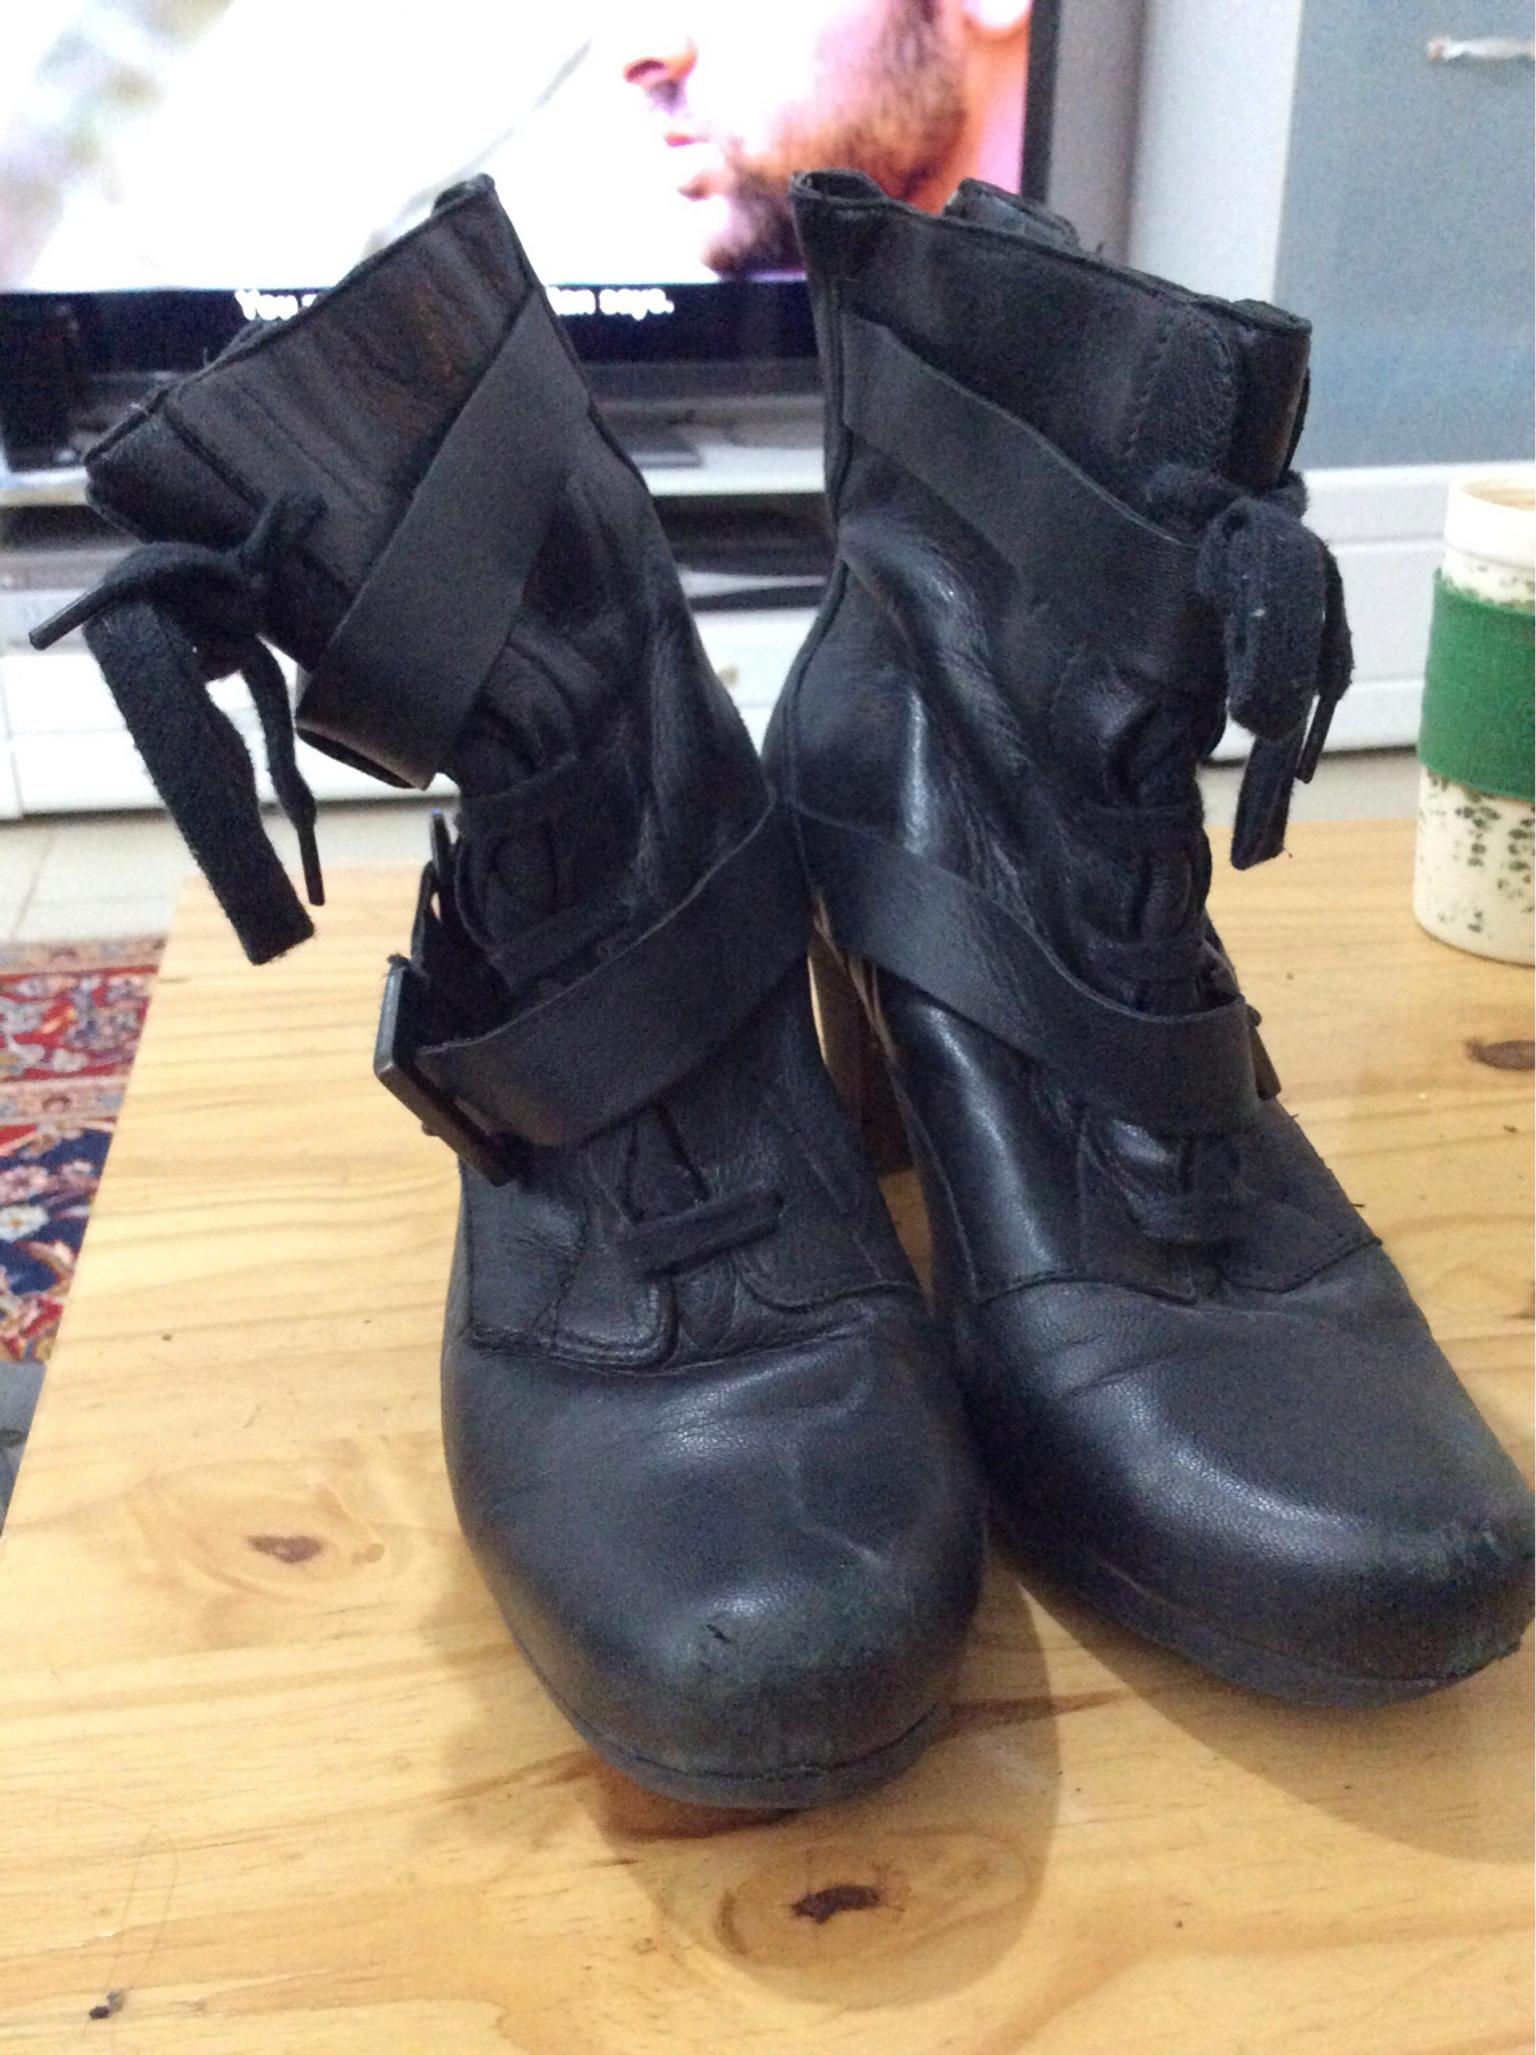 clarks ladies boots size 6